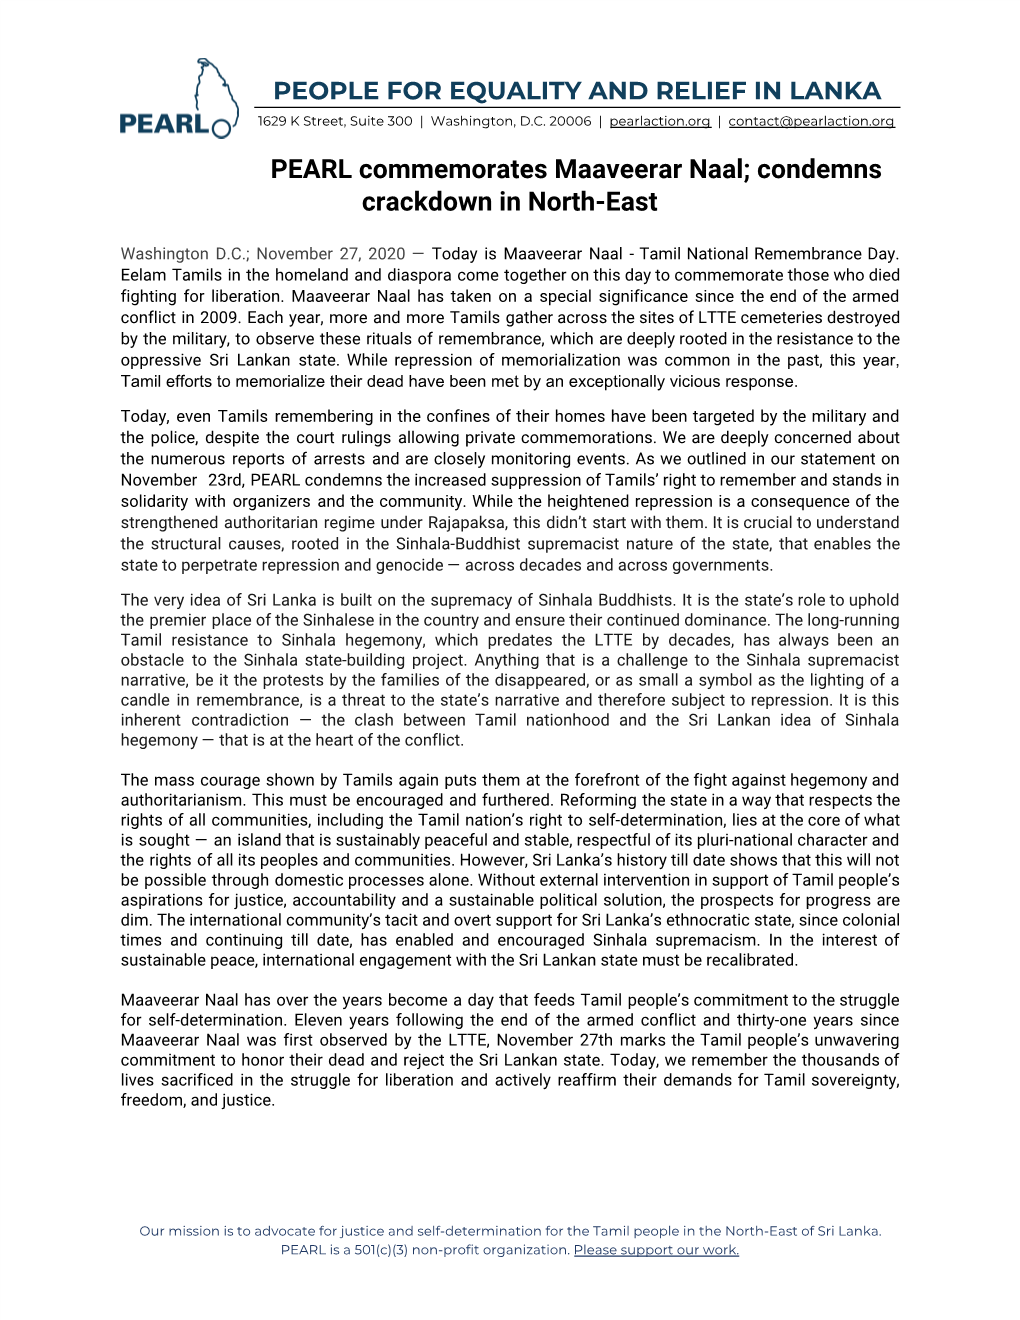 PEARL Commemorates Maaveerar Naal; Condemns Crackdown in North-East